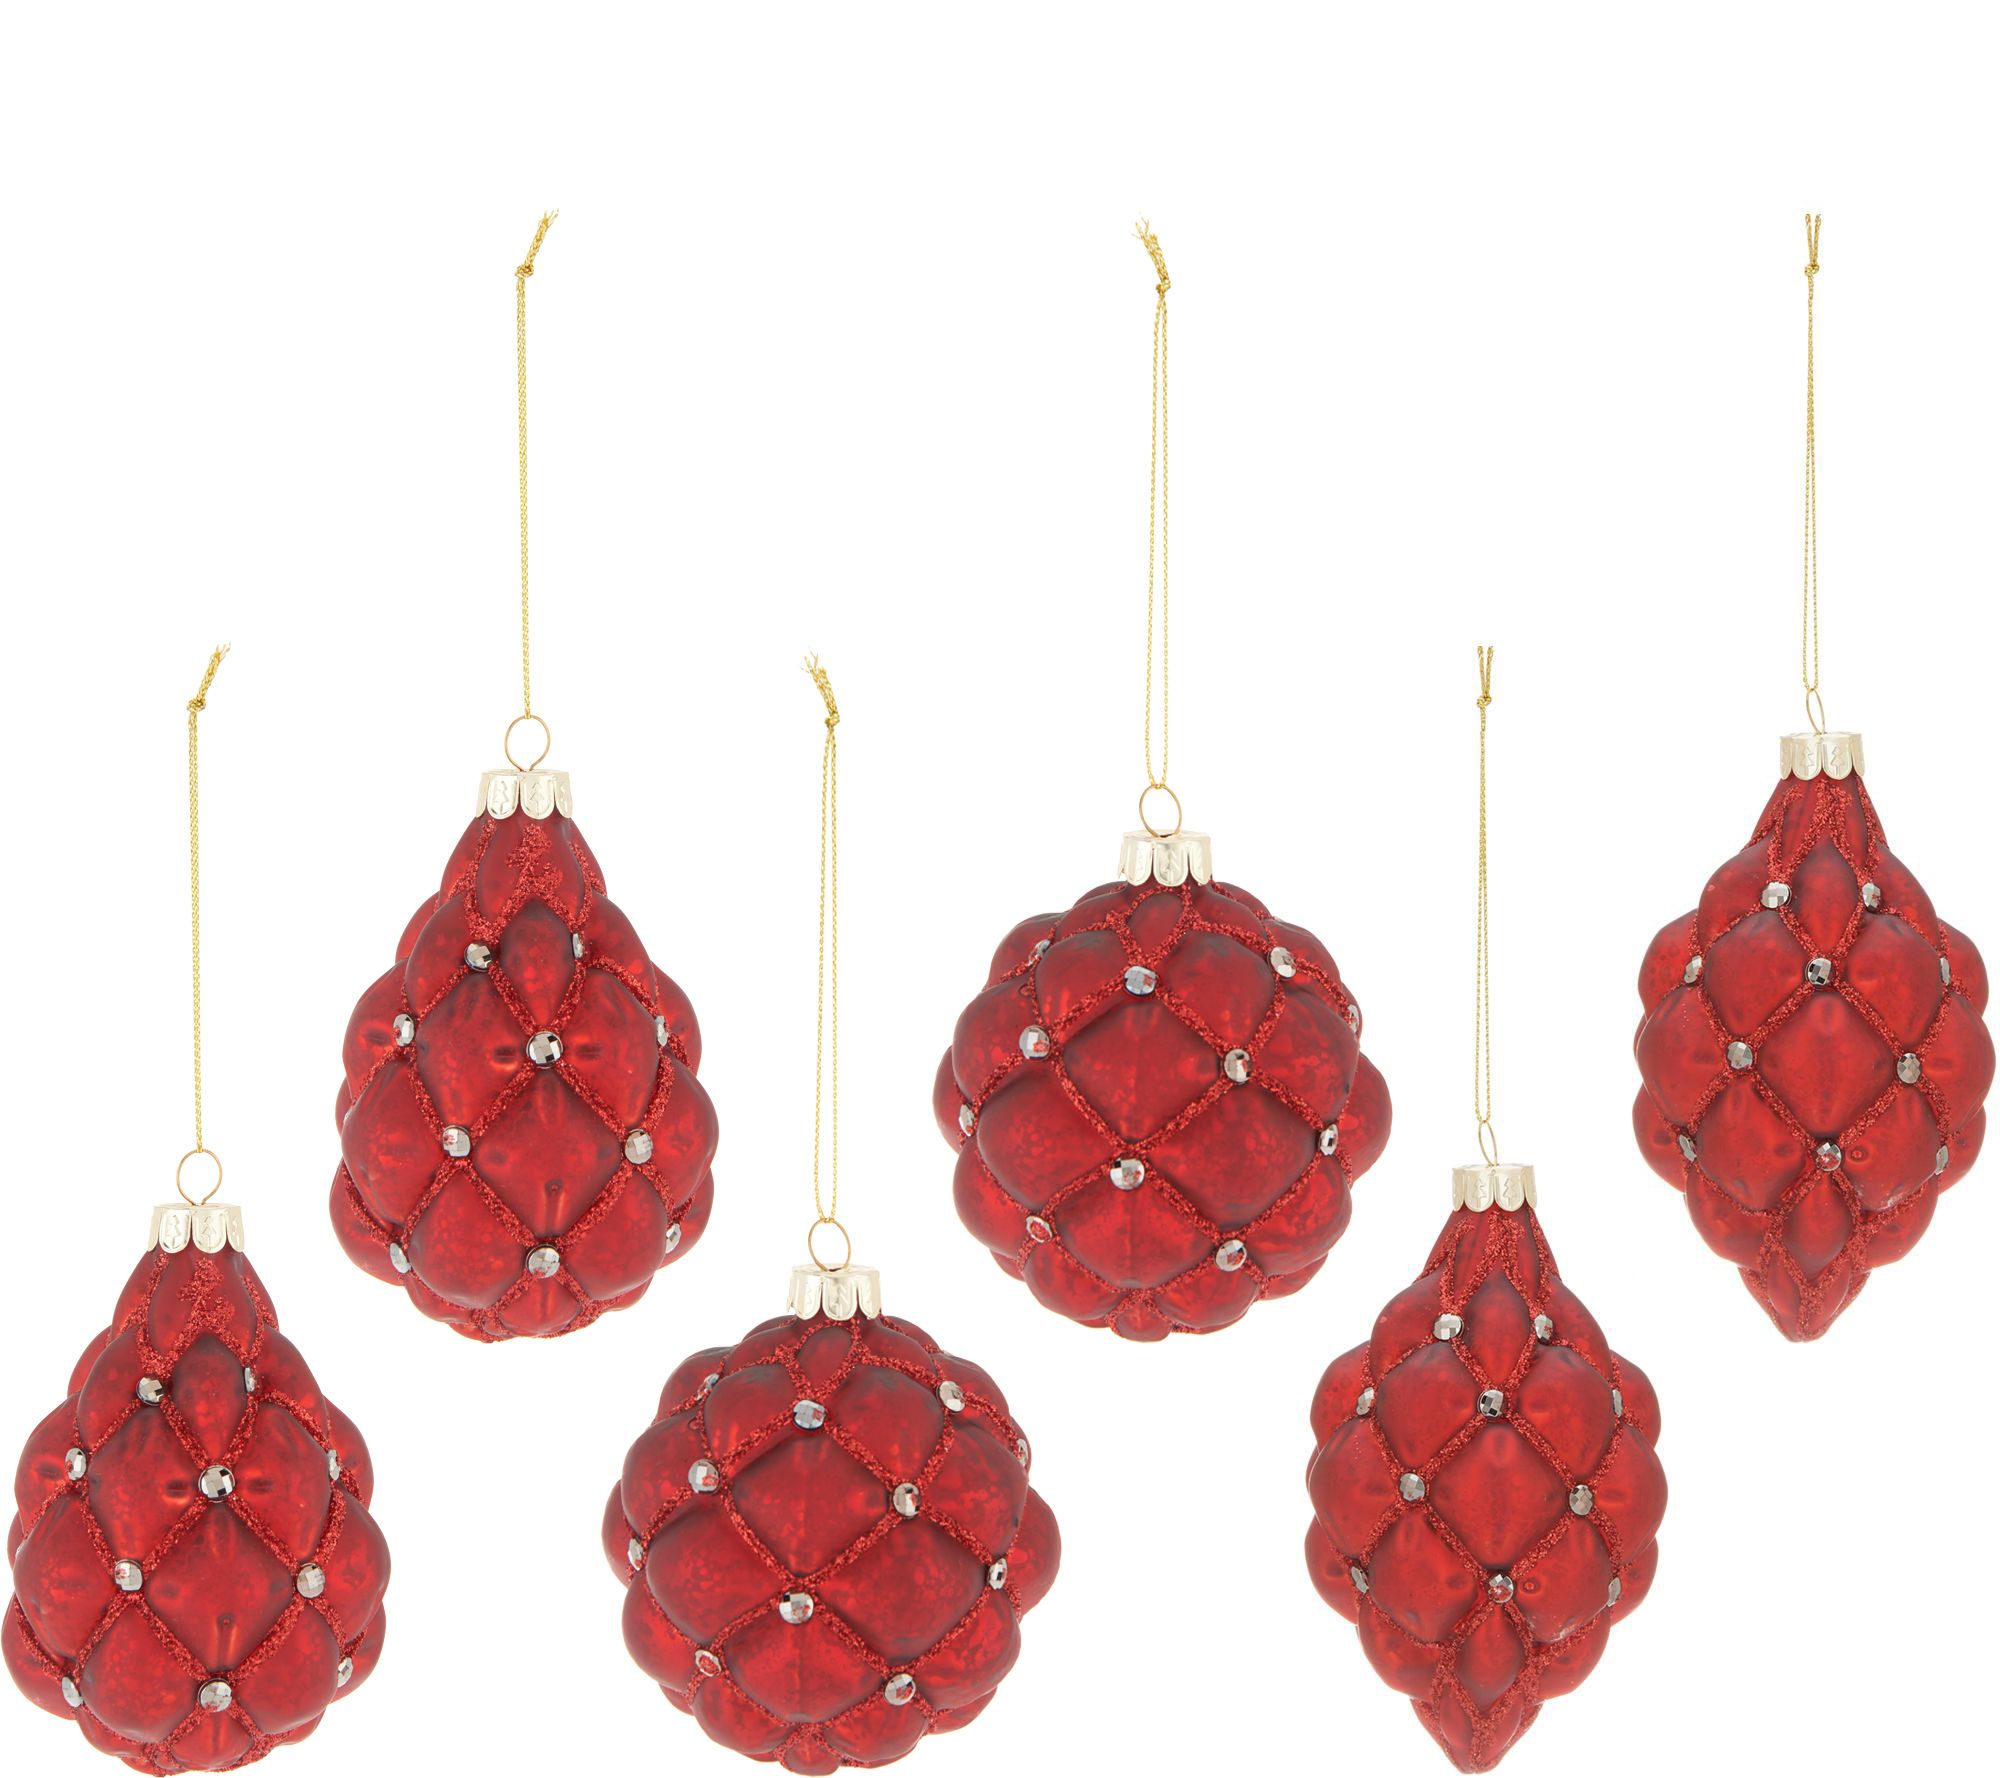 Inspire Me! Home Decor Set of 6 Tufted Finial Ball Ornaments - QVC.com